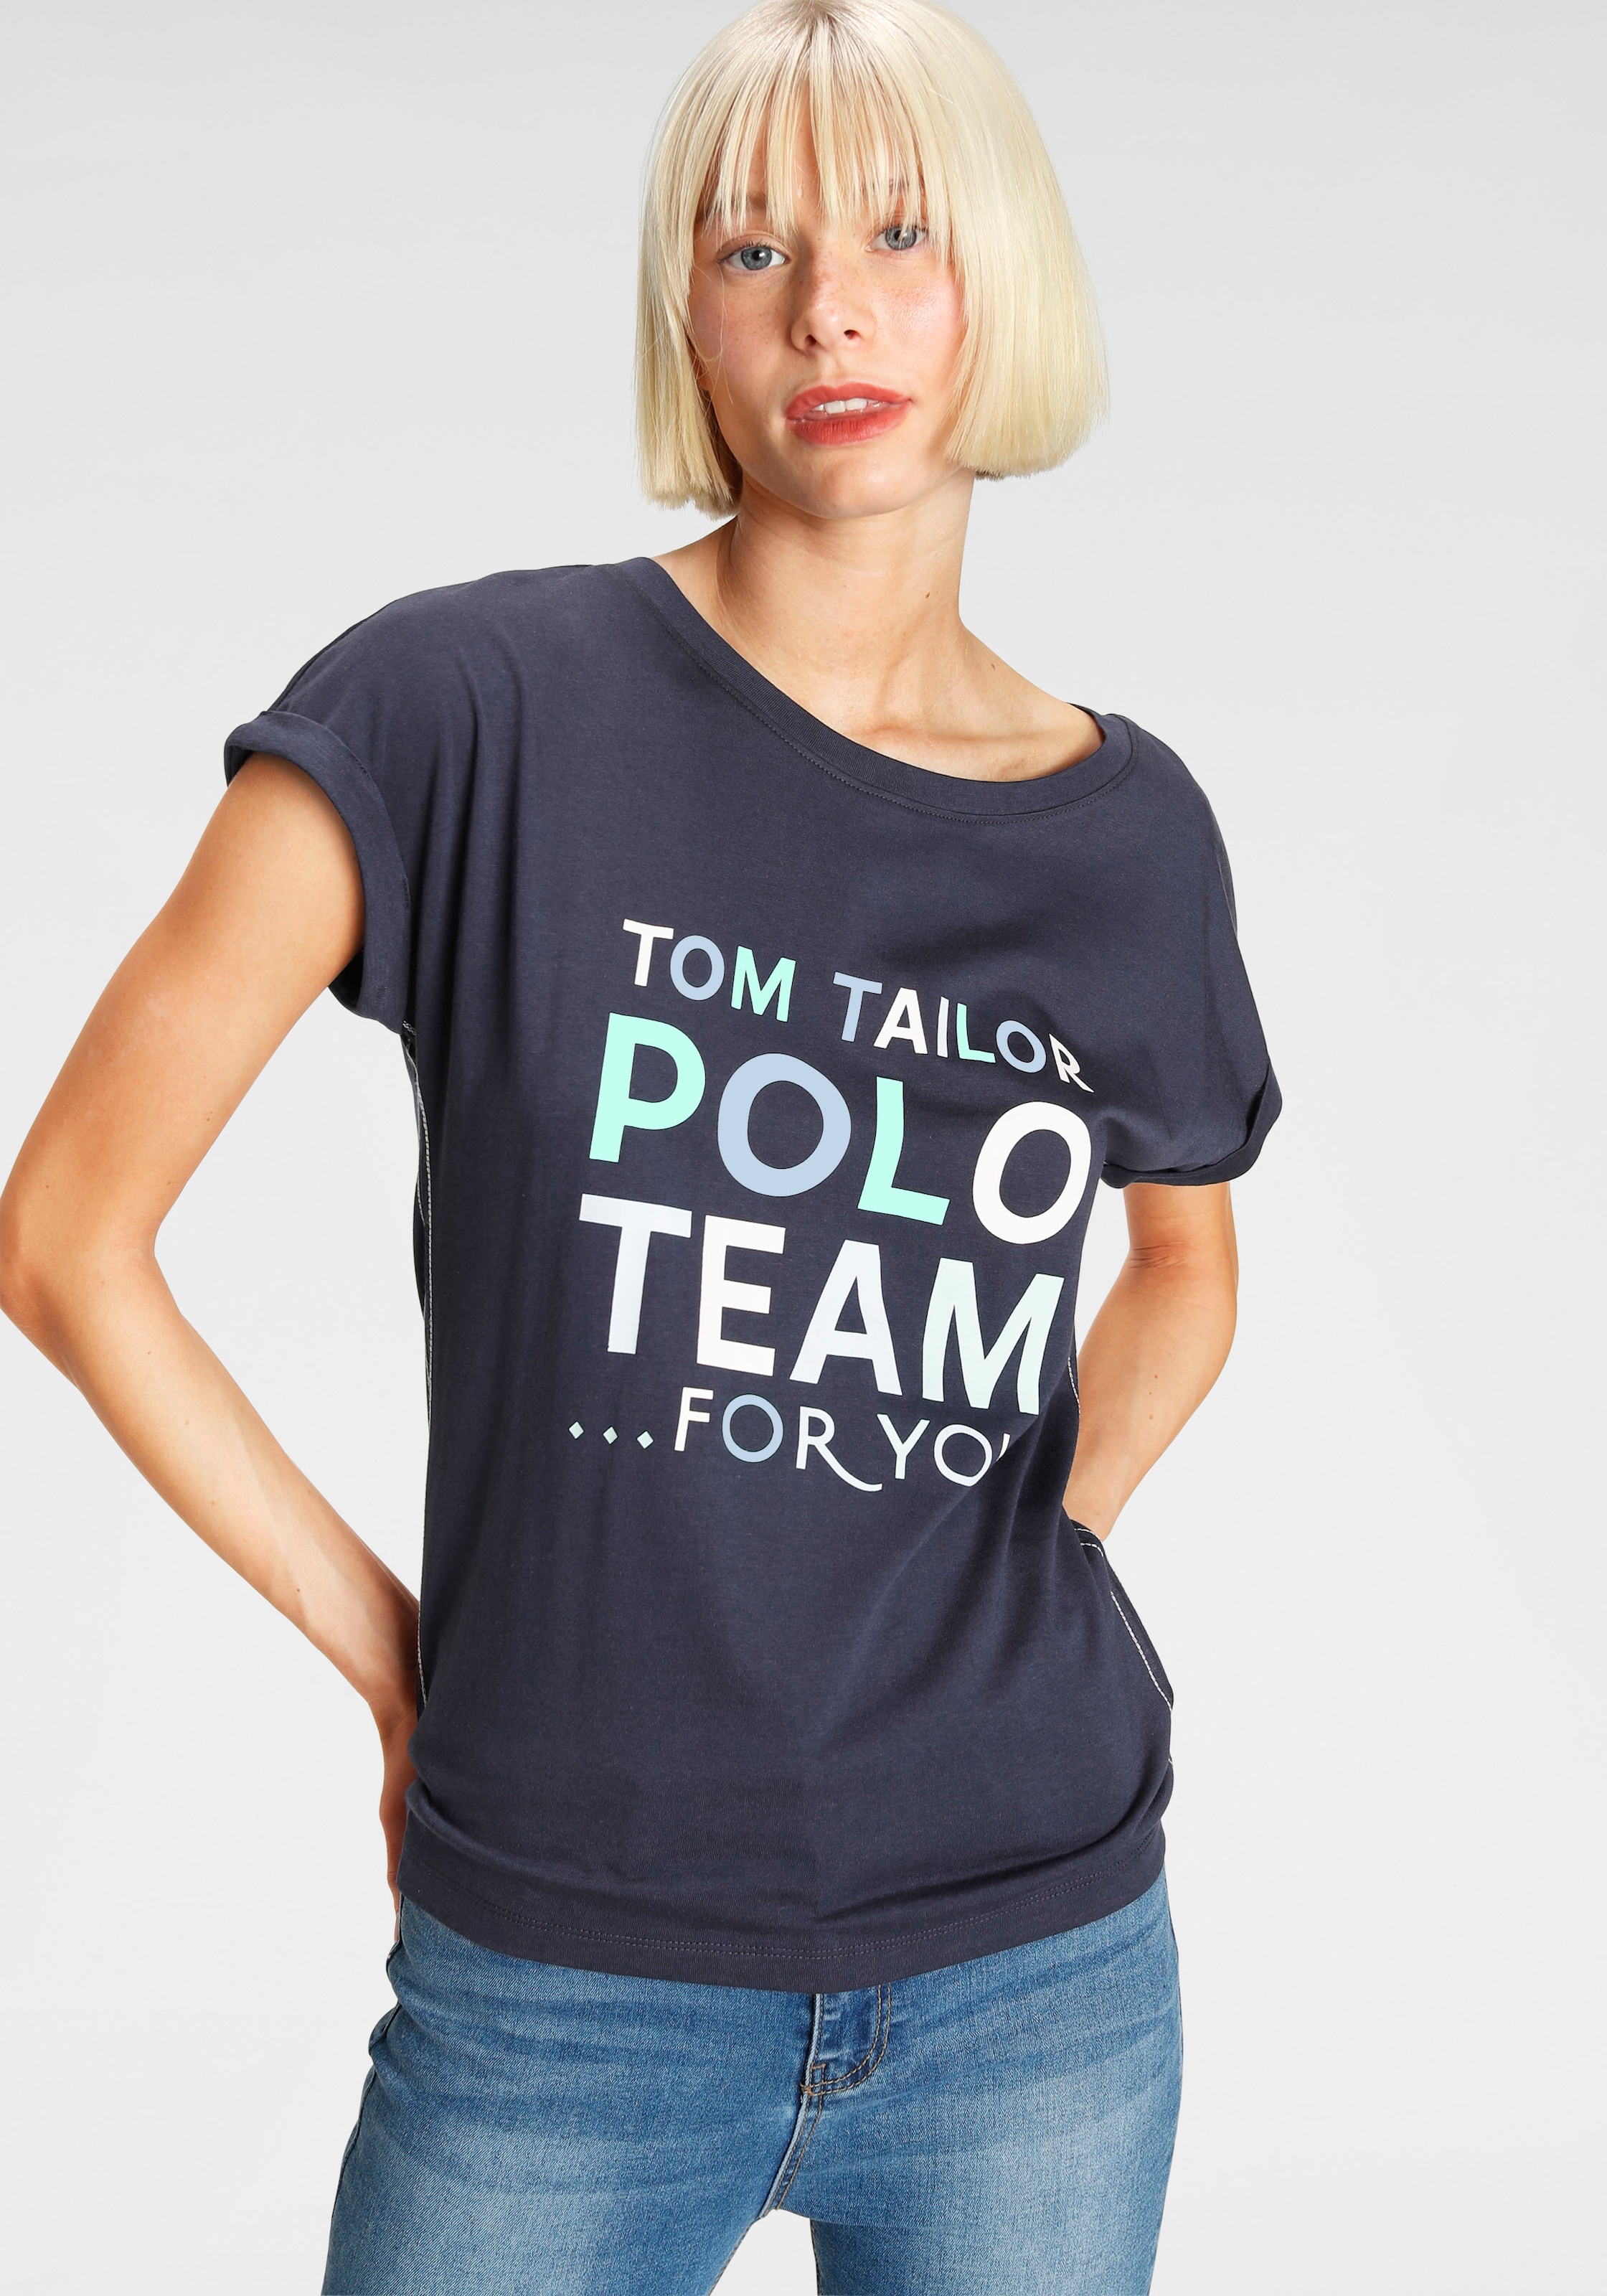 kaufen Polo Team Tom ▻ Tailor online